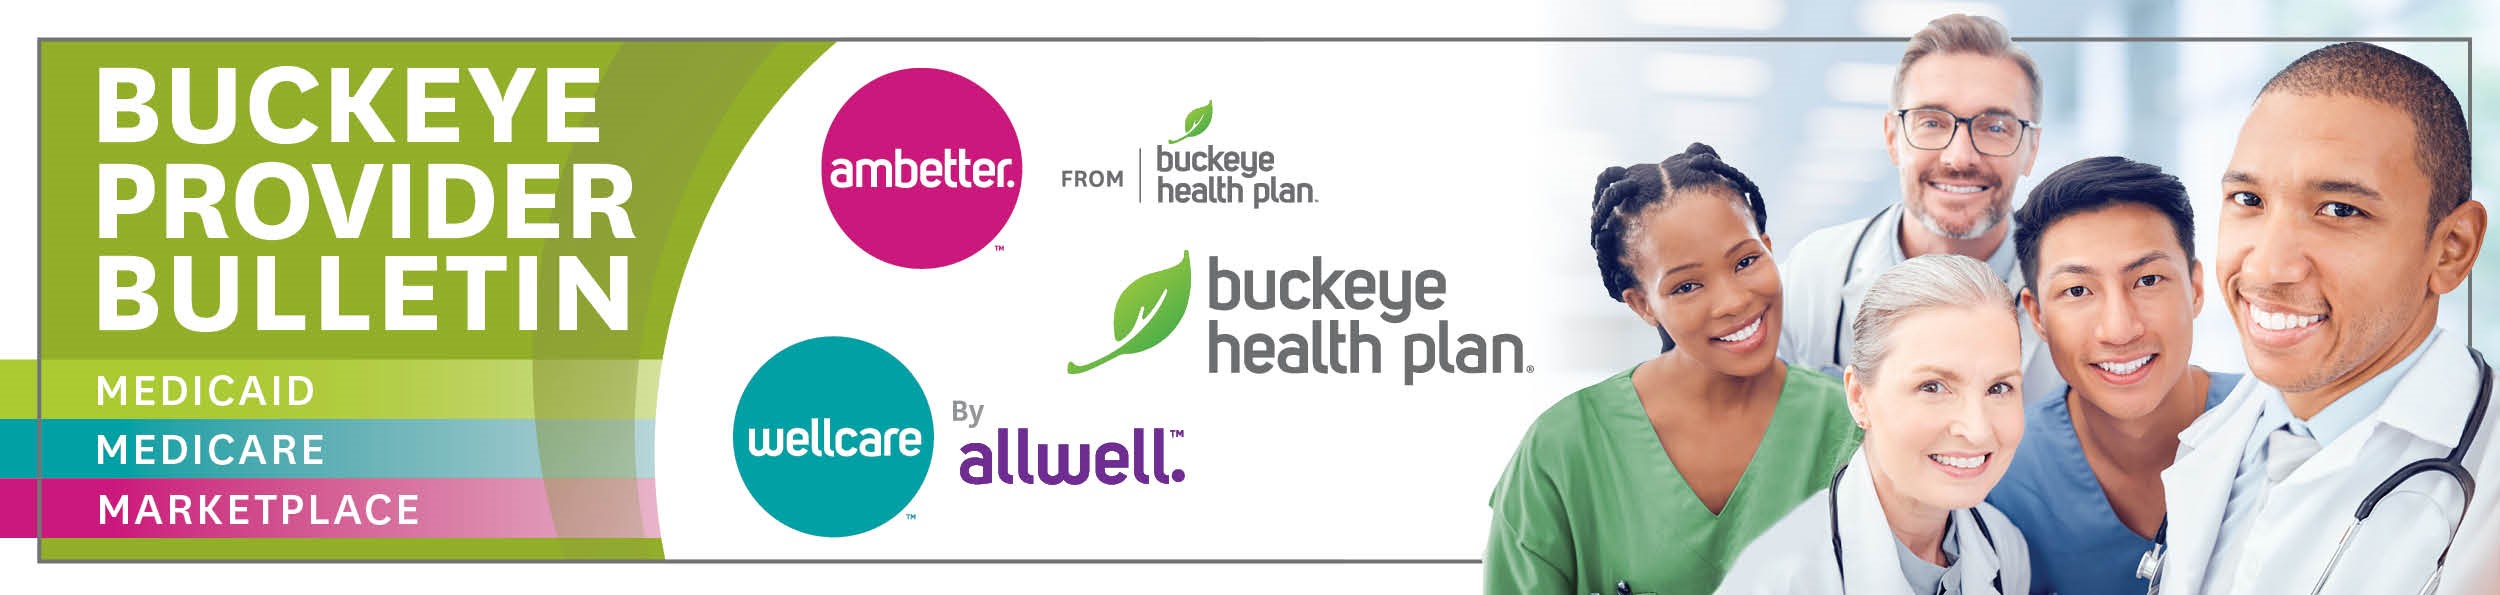 Buckeye Provider Bulletin - Medicaid Medicare Marketplace